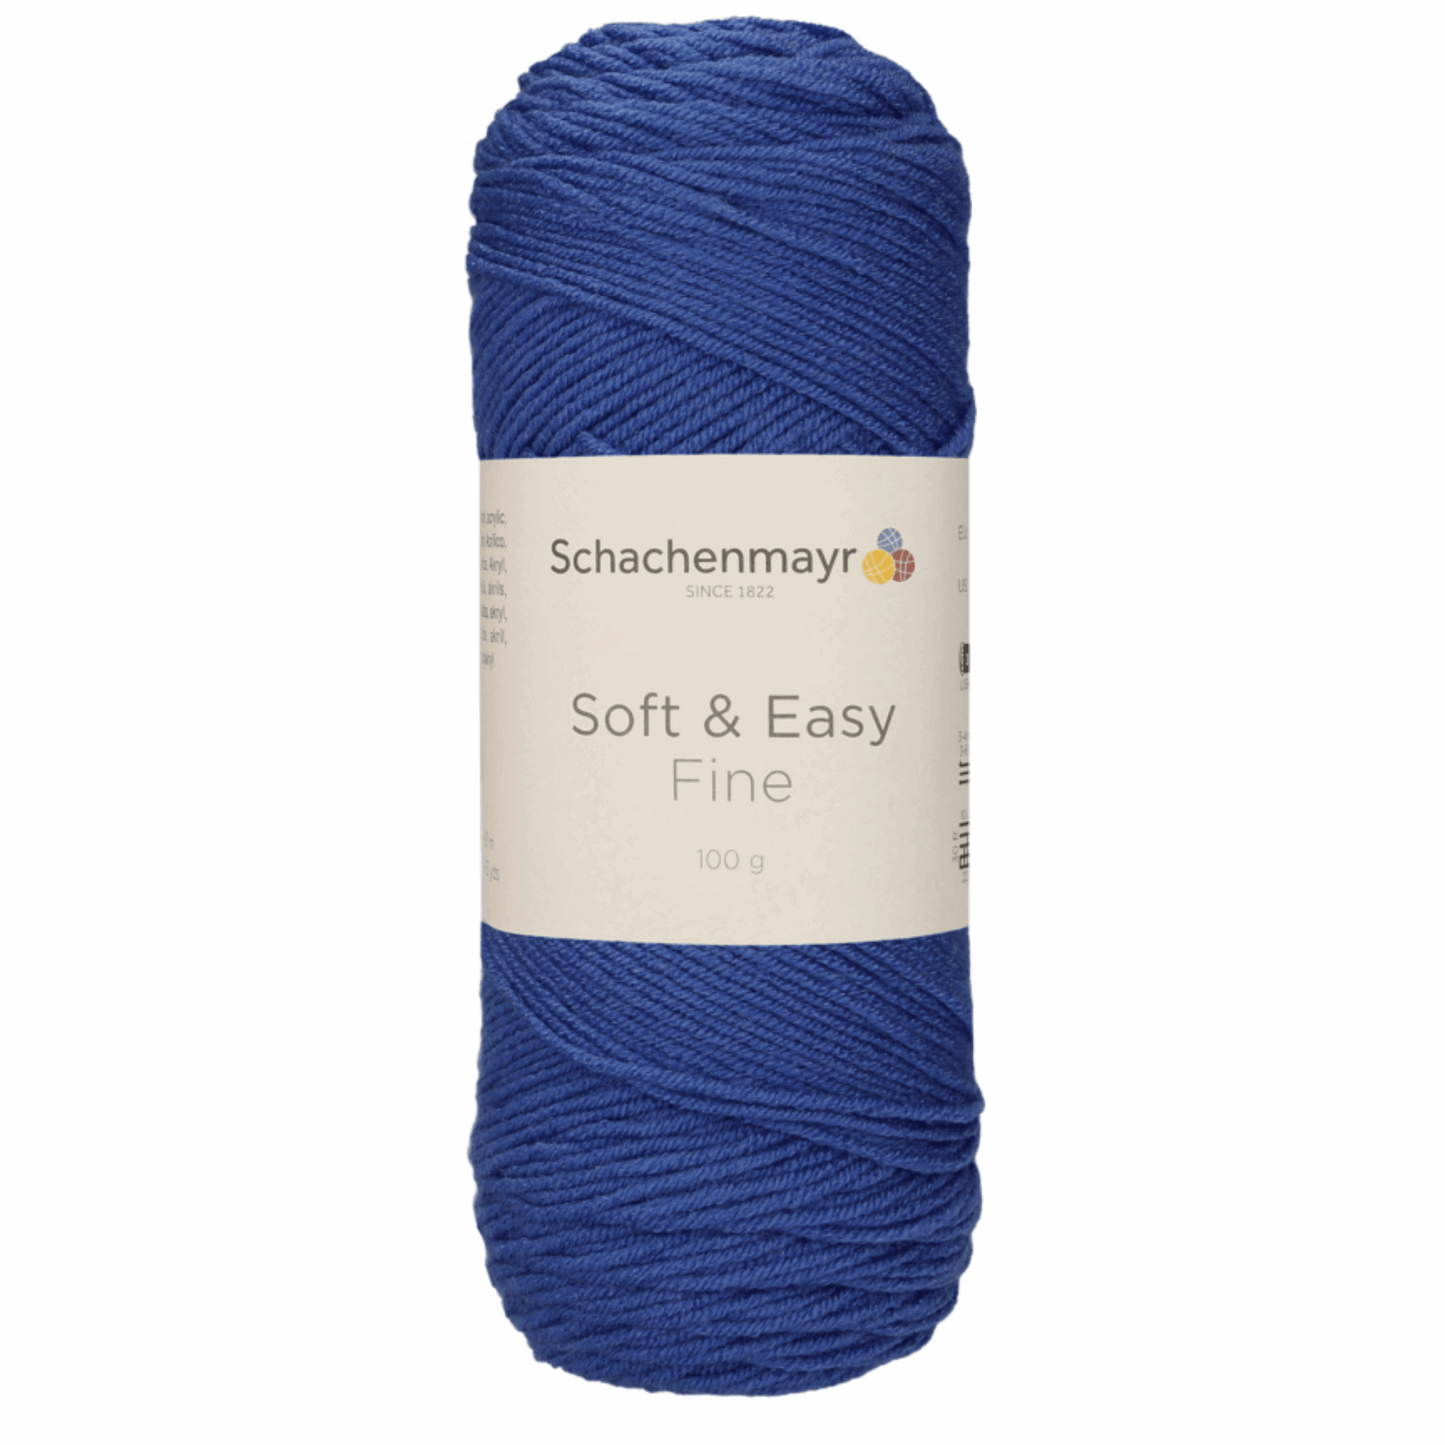 Schachenmayr Soft & Easy Fine 100g, 90402, Farbe Capri 51